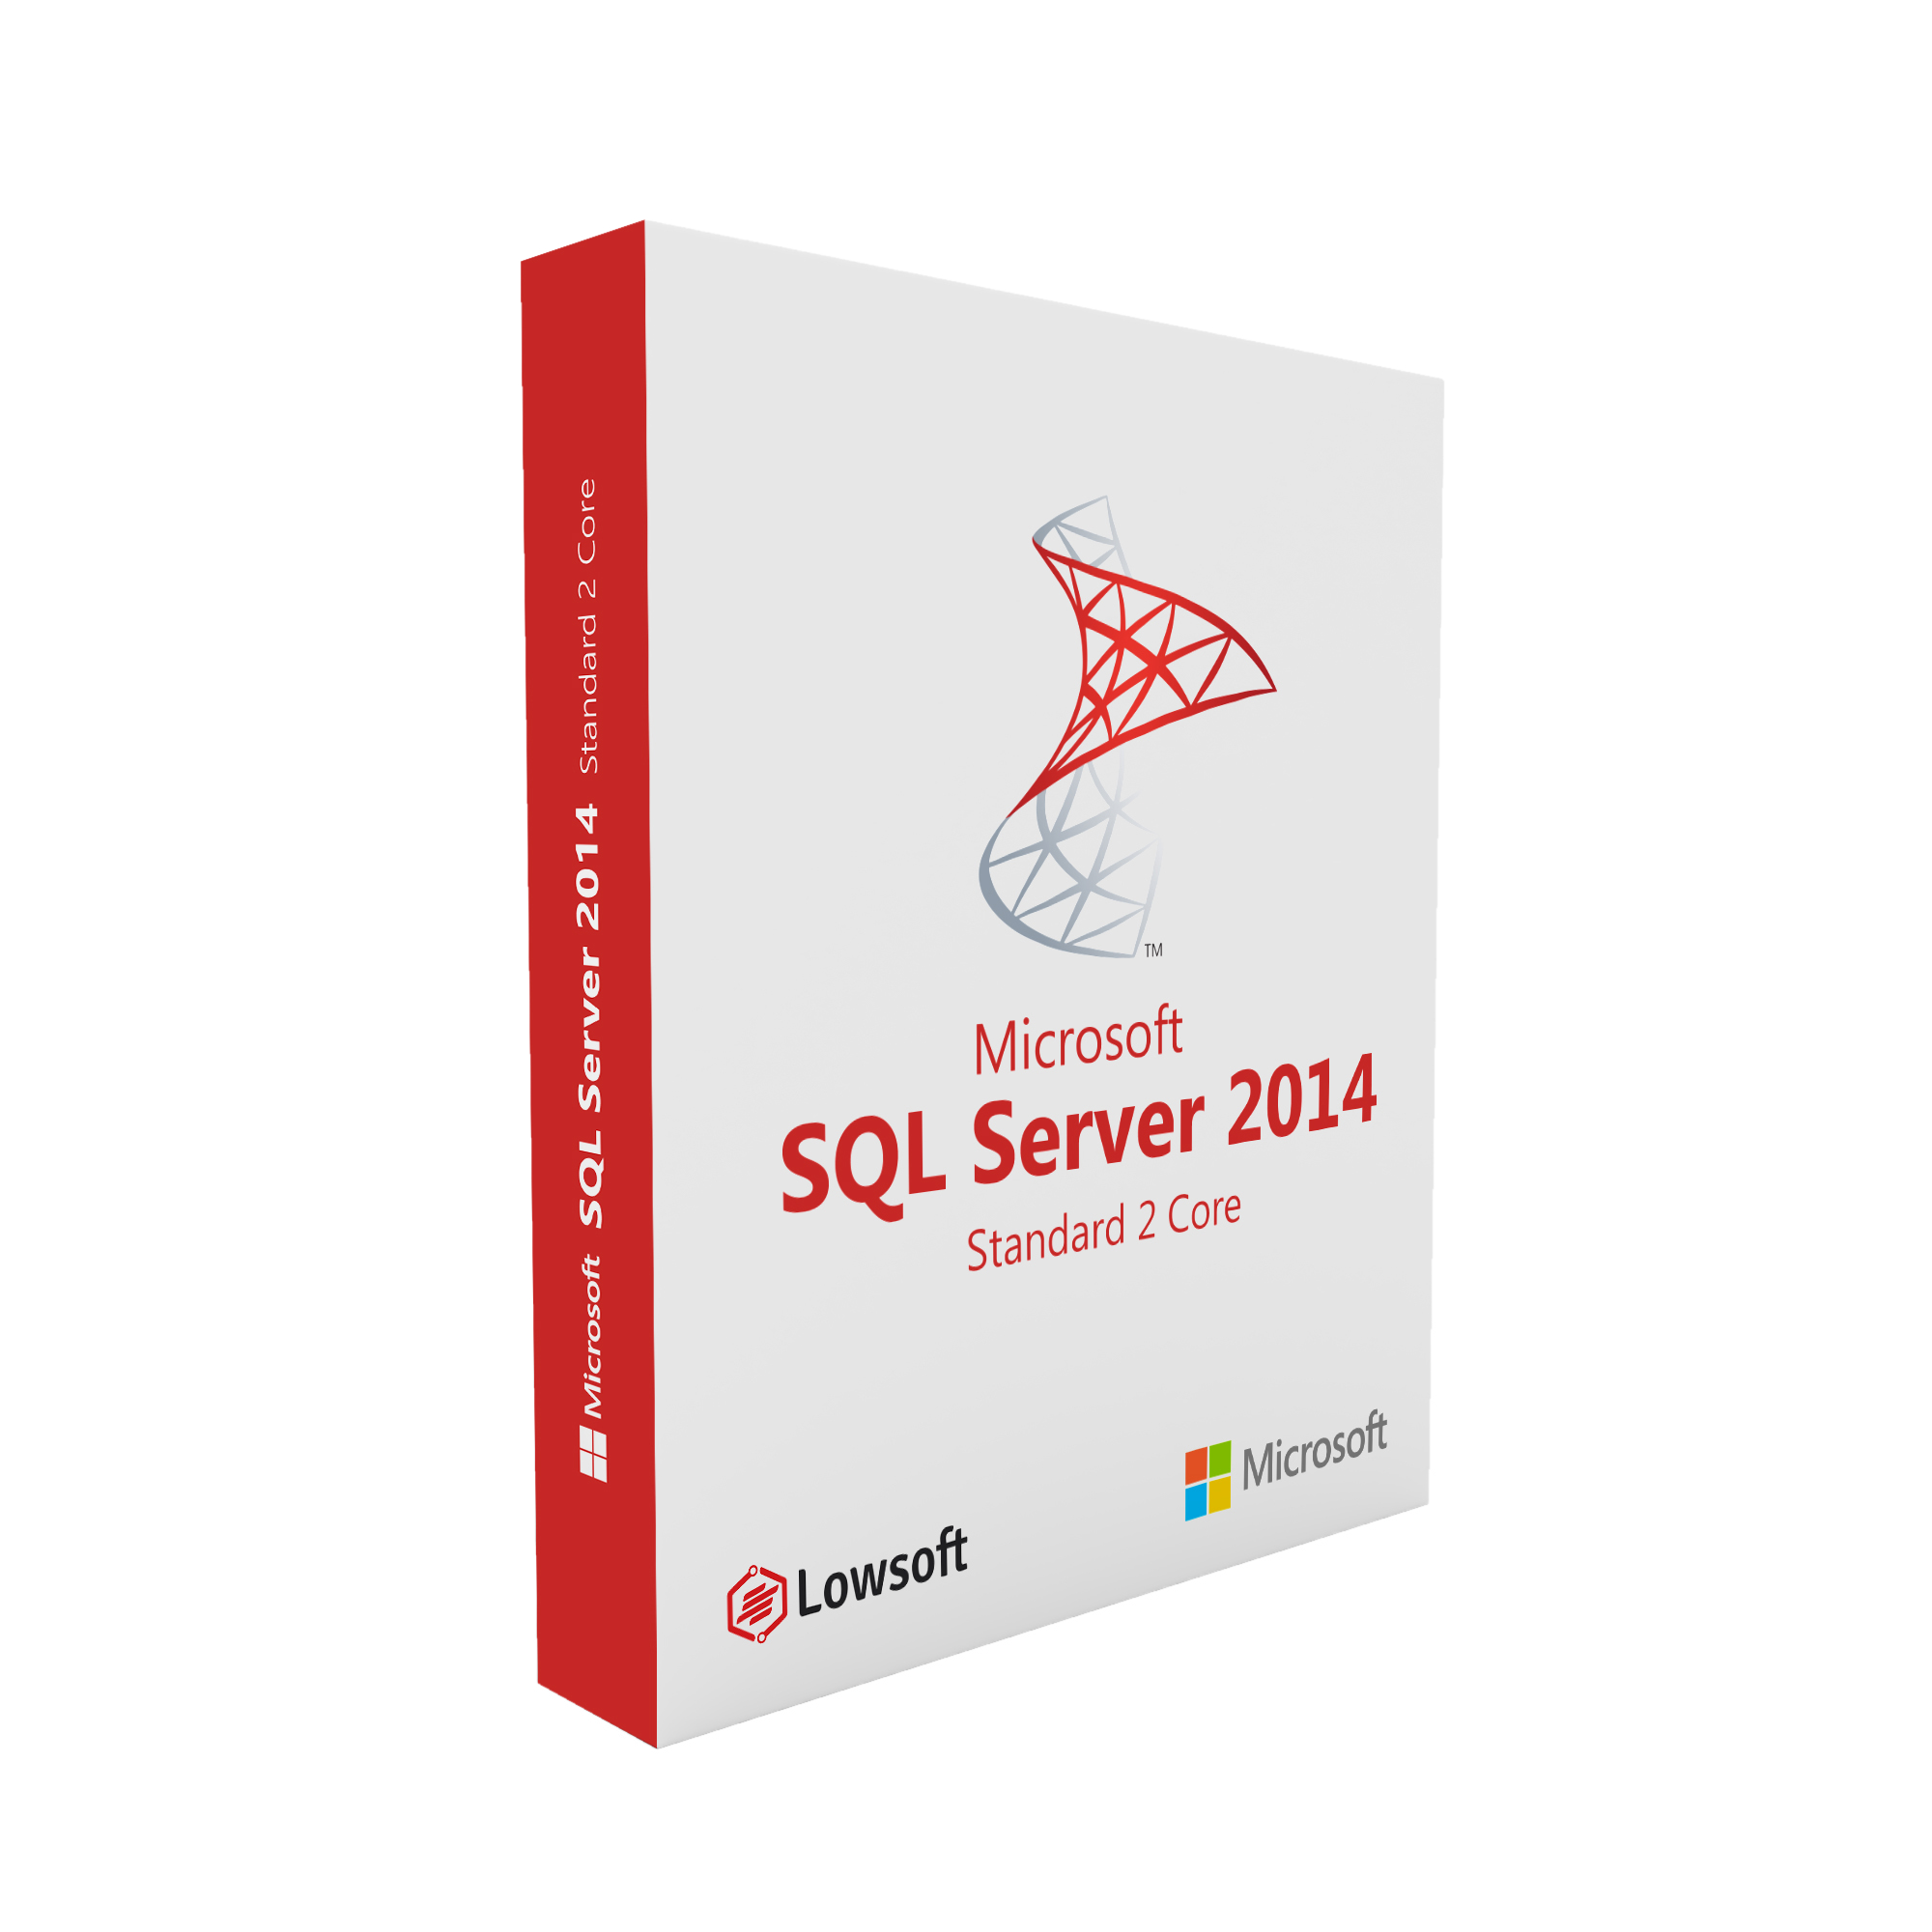 SQL Server 2014 Standard (2 Core)